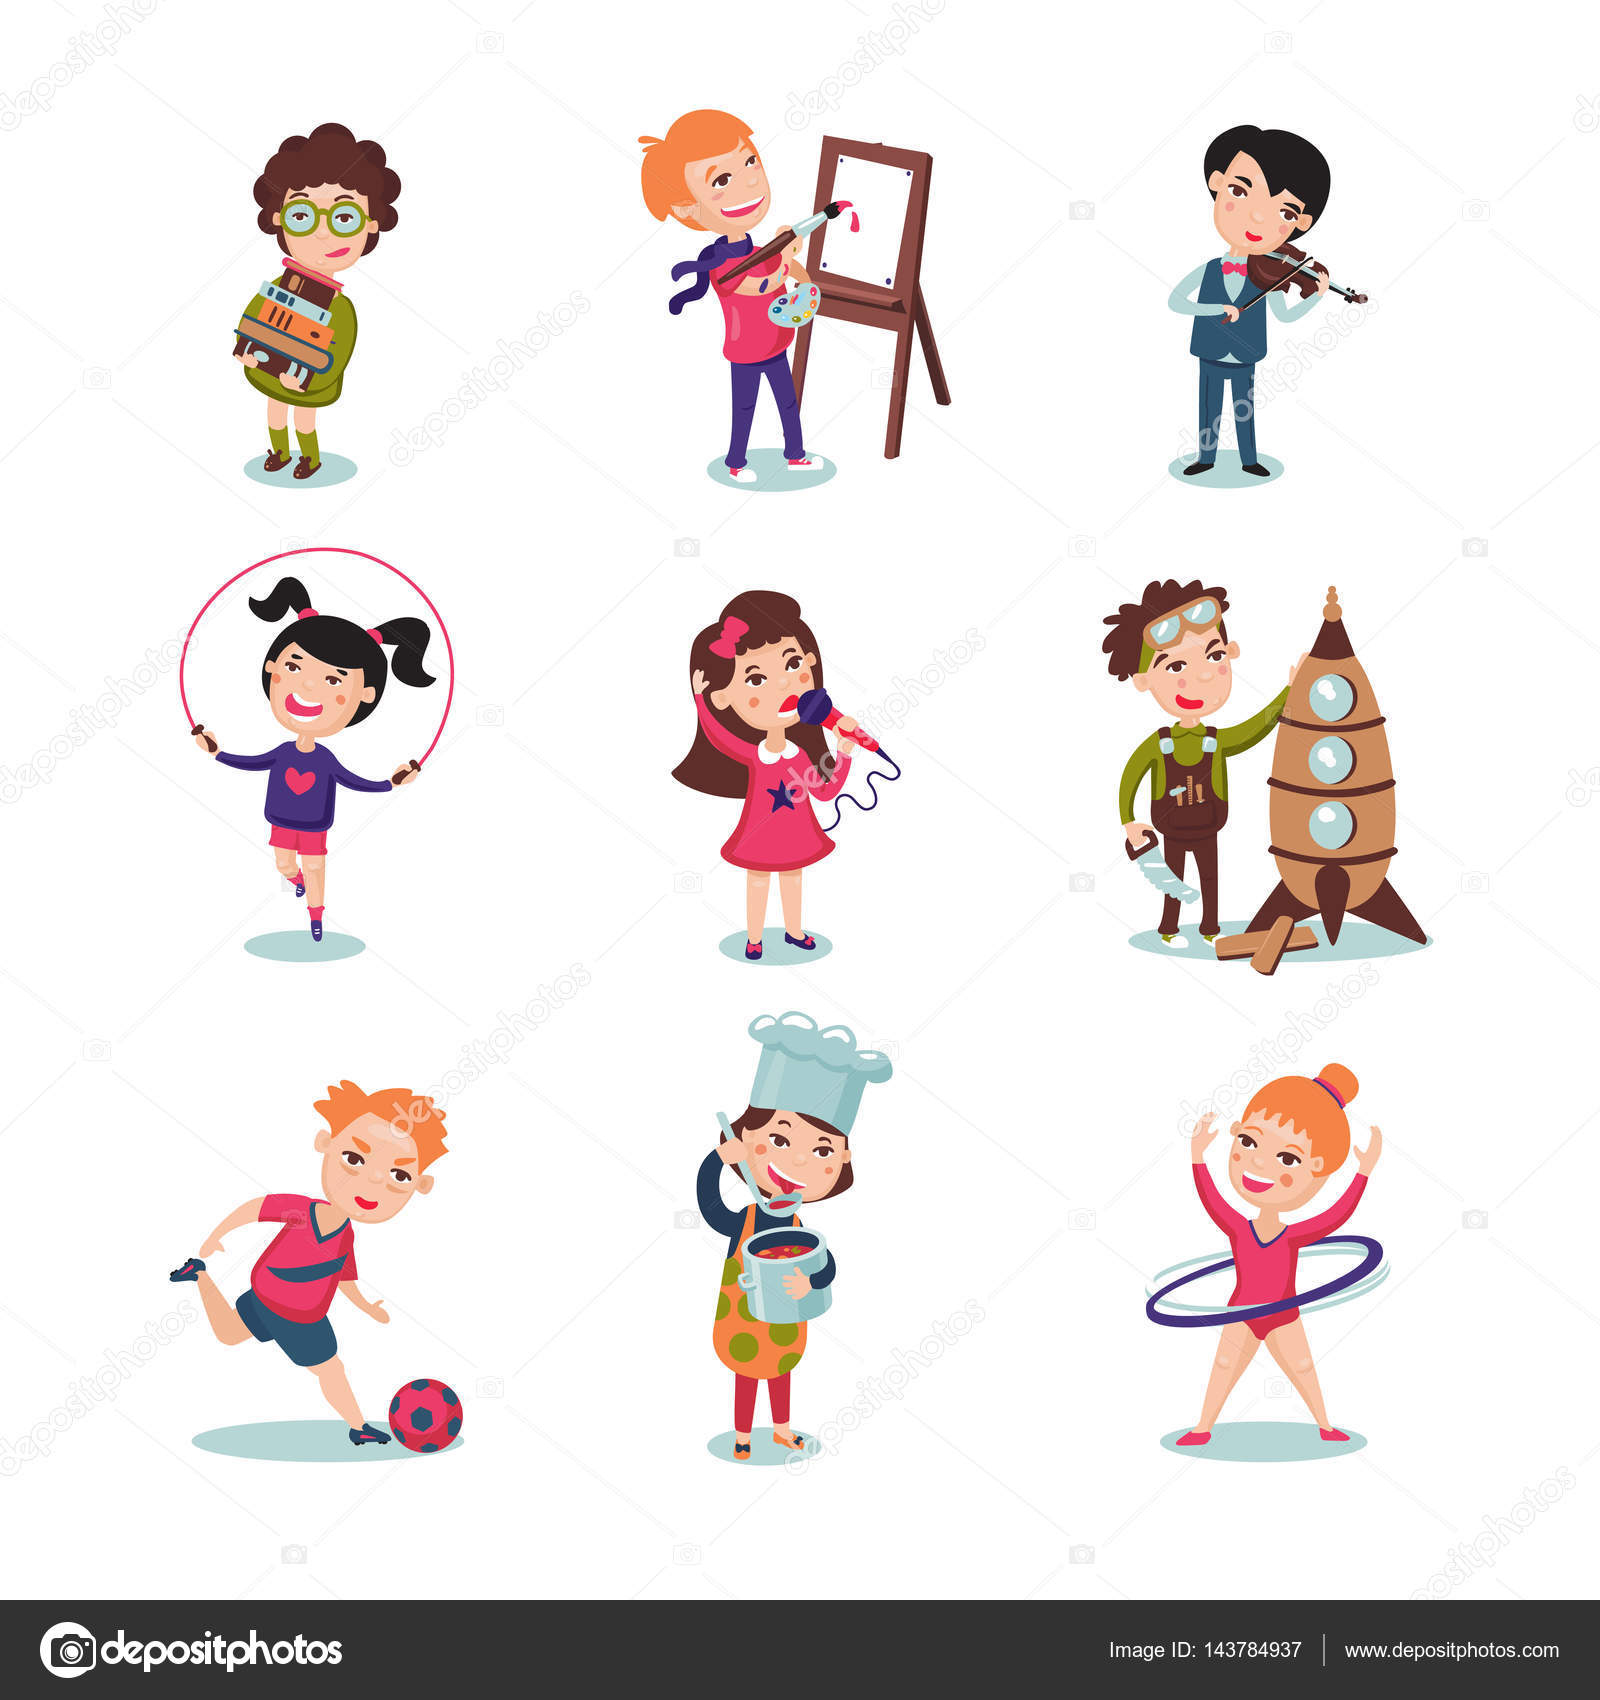 depositphotos_143784937-stock-illustration-children-hobbies-set.jpg